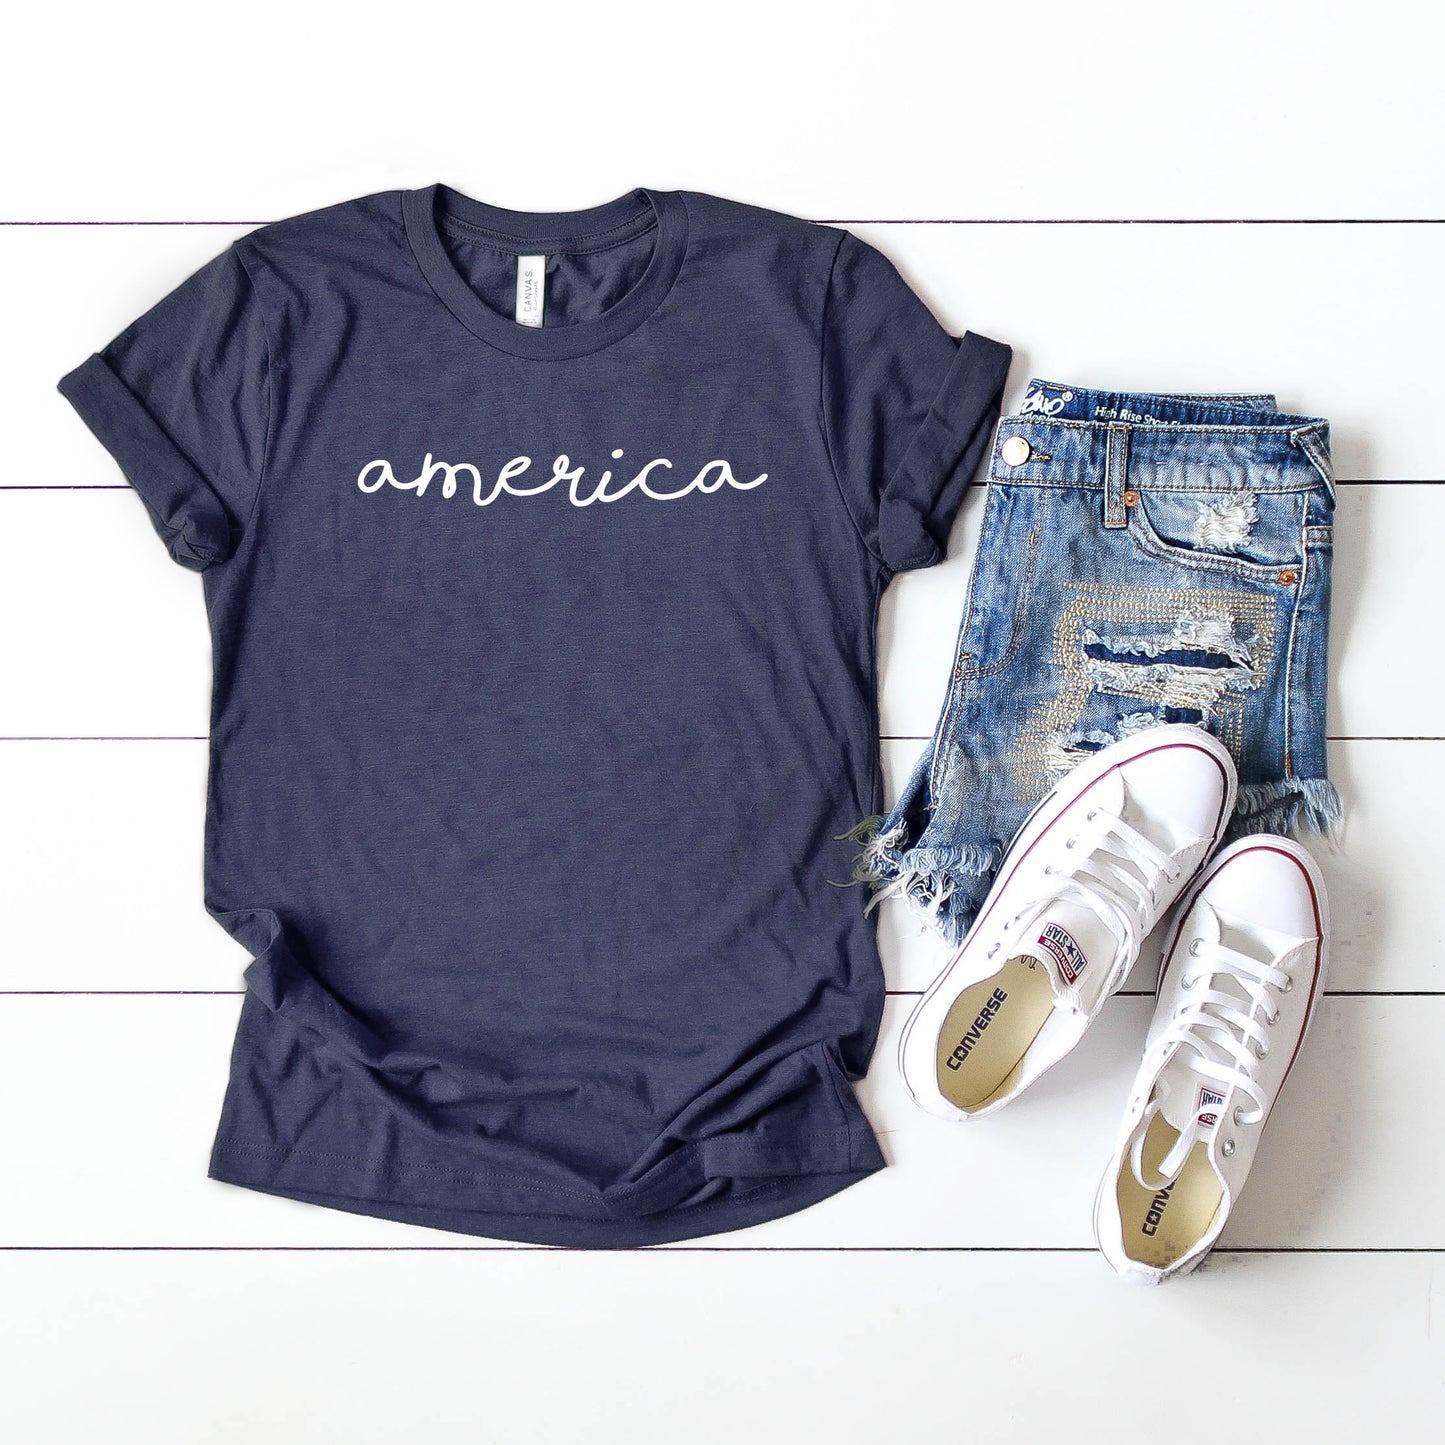 America - Cursive | Short Sleeve Graphic Tee